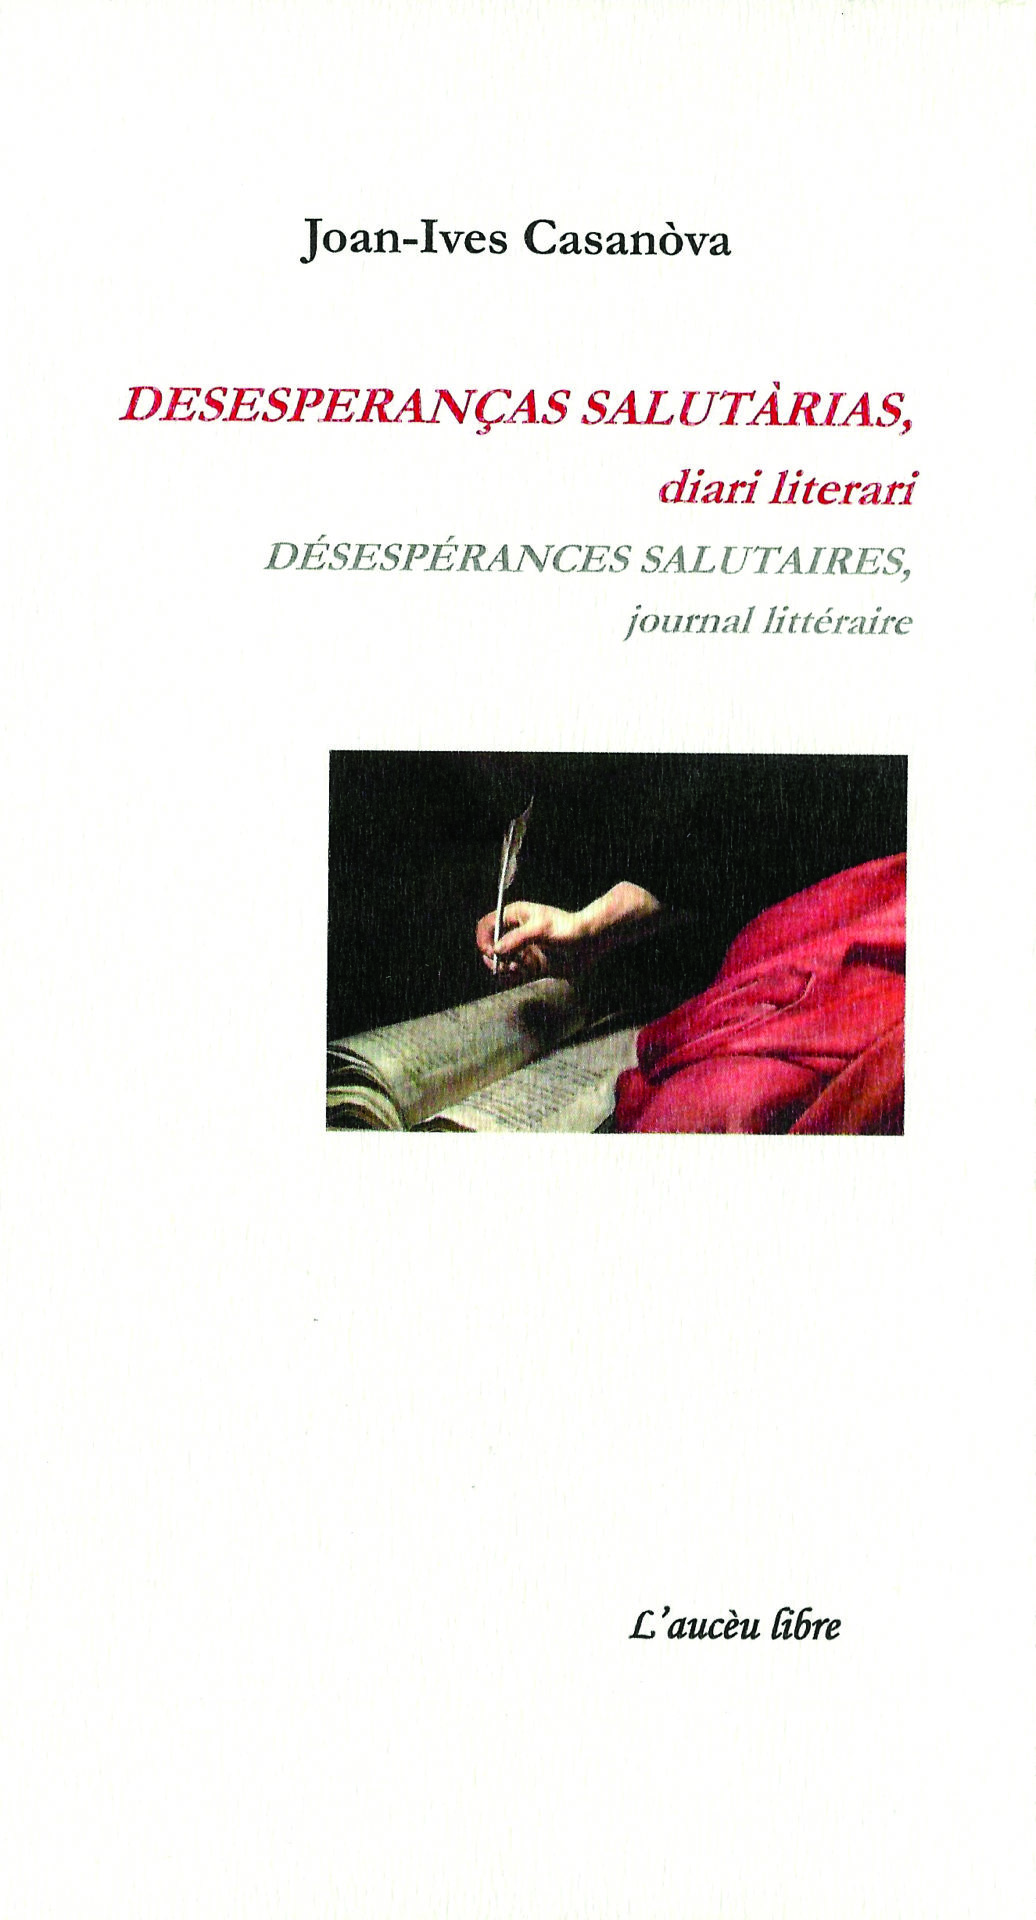 Desesperanças salutàrias, diari literari – Désespérances salutaires, journal littéraire